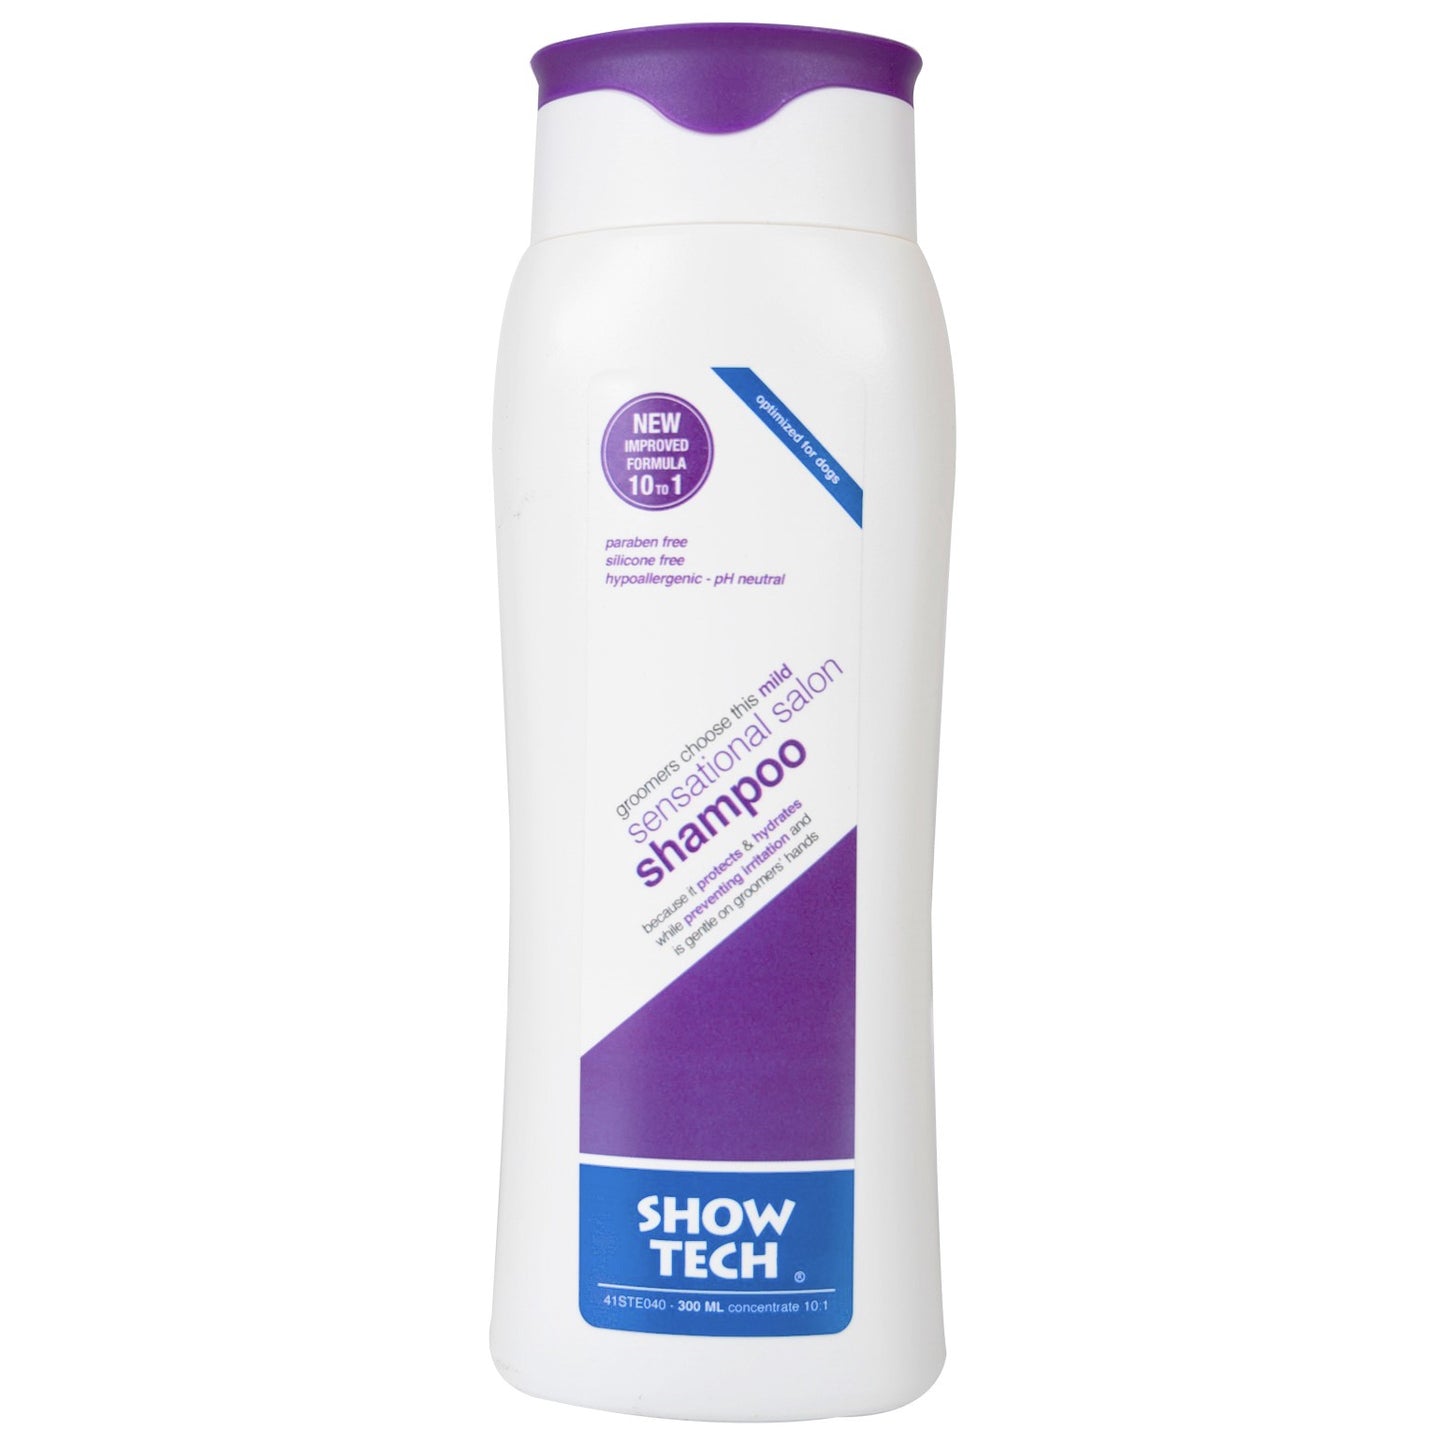 Show Tech Sensational Salon Shampoo, schonendes Shampoo, erleichtert das Syling, verkürzt die Trockenzeit